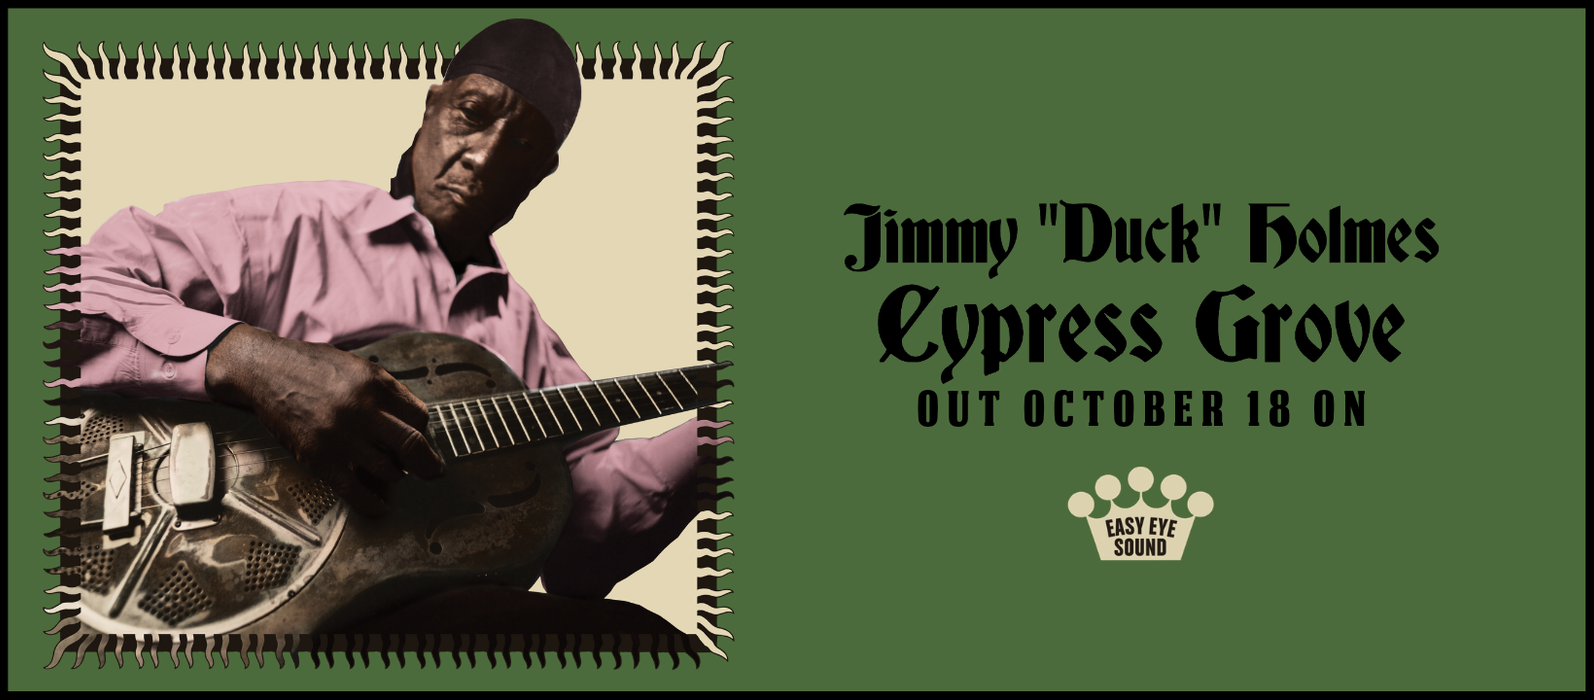 Jimmy "Duck" Holmes: Cypress Grove [Audio Vinyl]